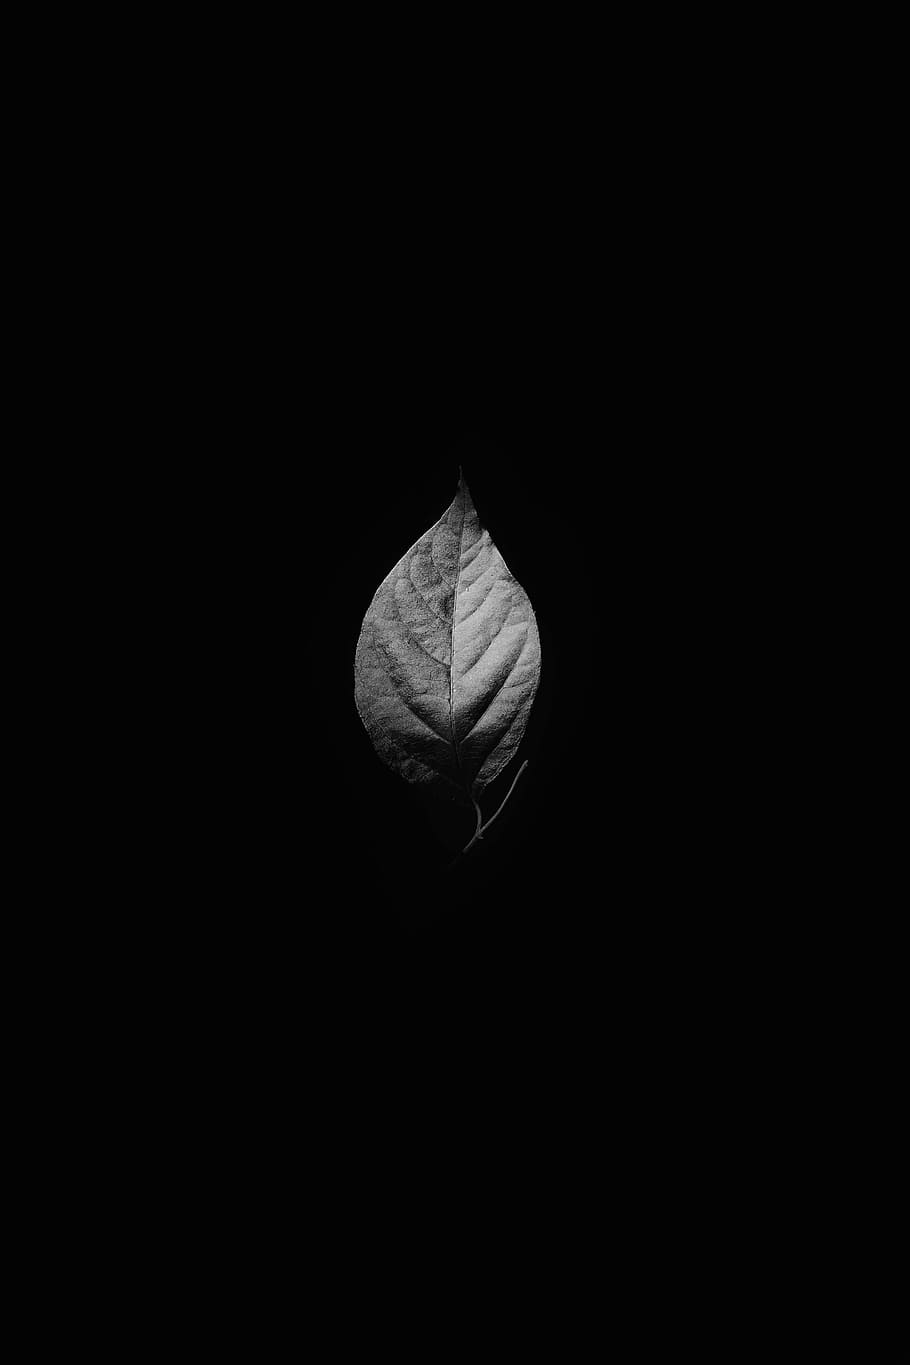 fotografi abu-abu, daun, tanaman, alam, vena, hitam dan putih, satu warna, gelap, hitam, ruang fotokopi